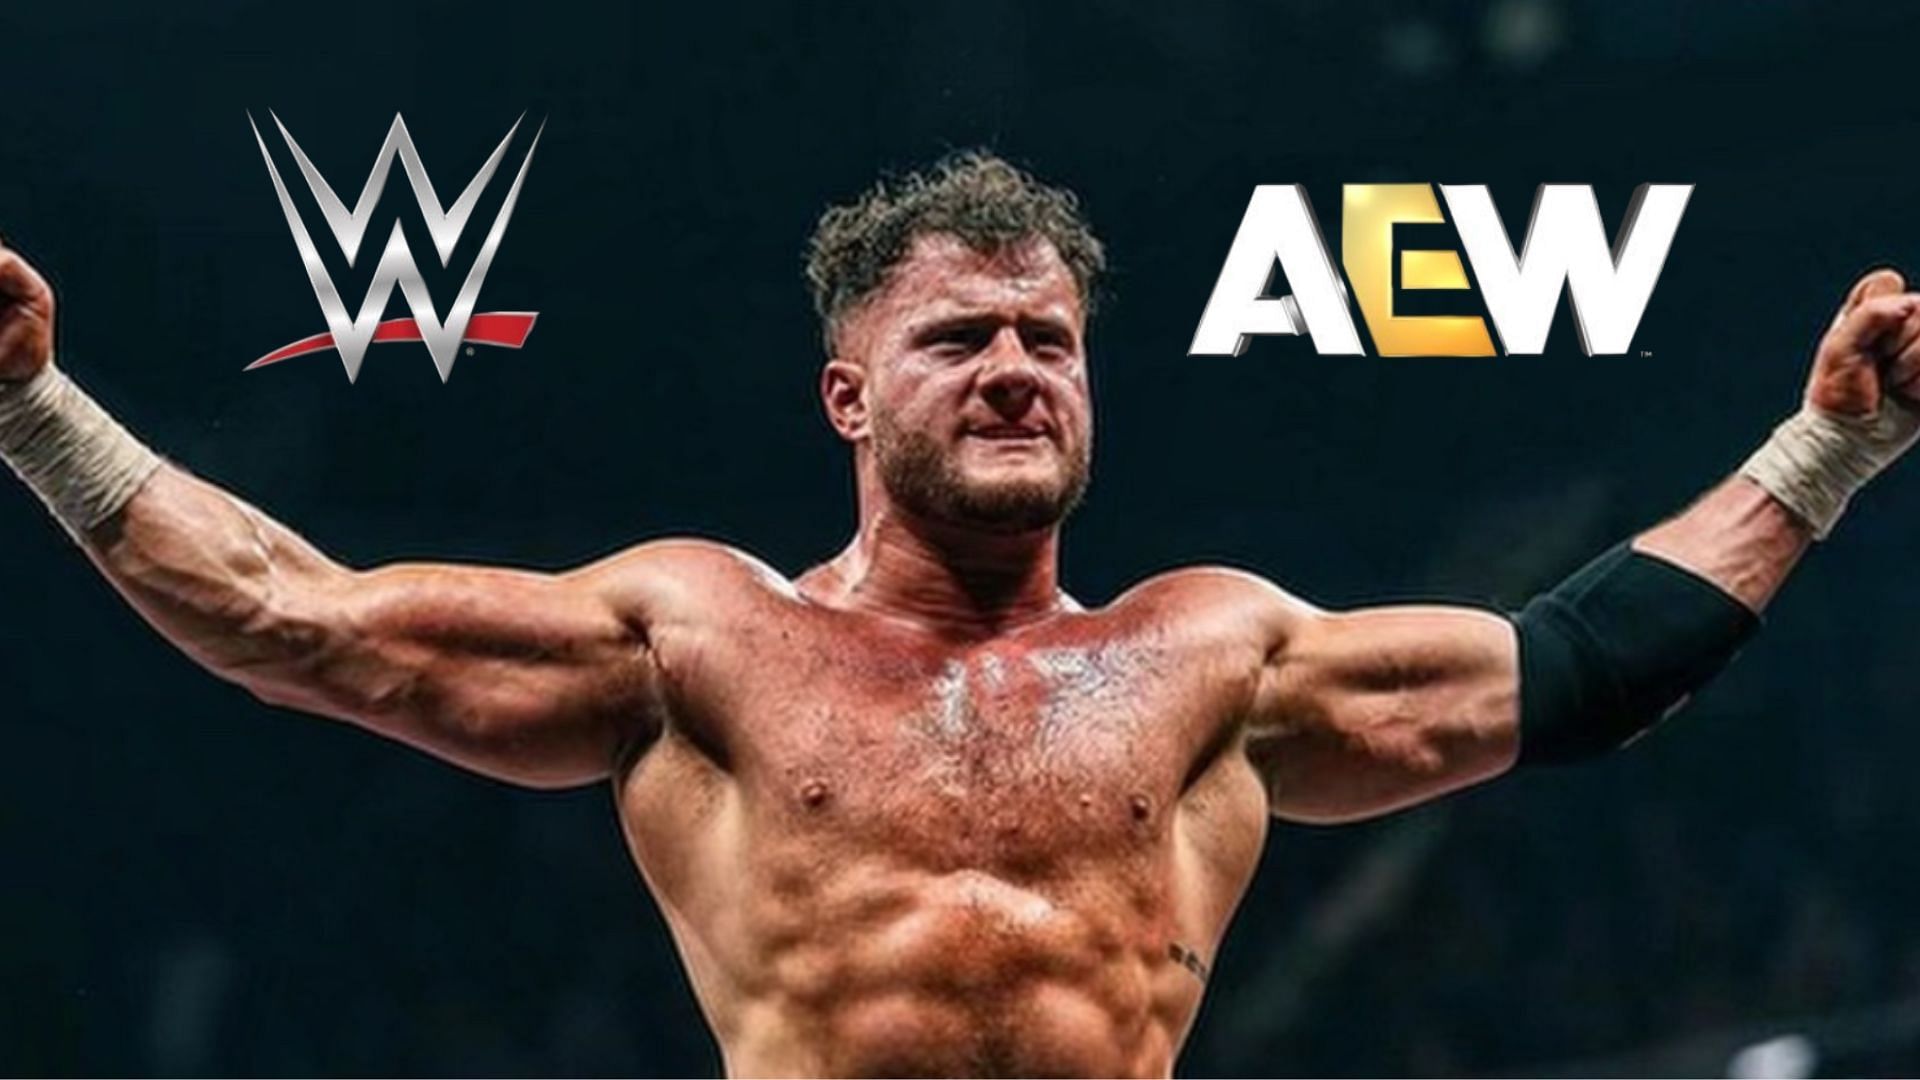 MJF is a former AEW World Champion [Image Credits: WWE